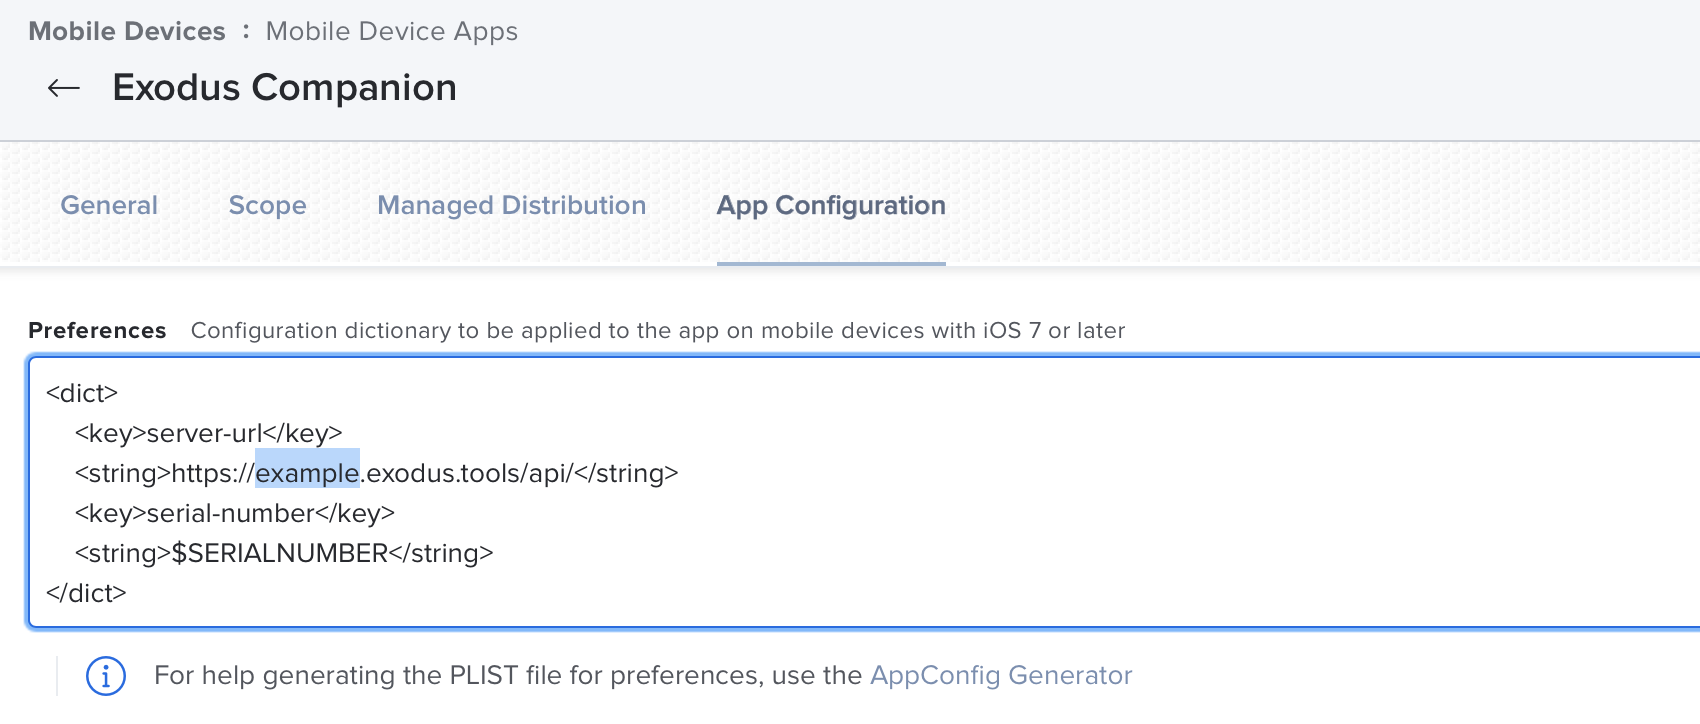 Exodus Companion App: App Configuration